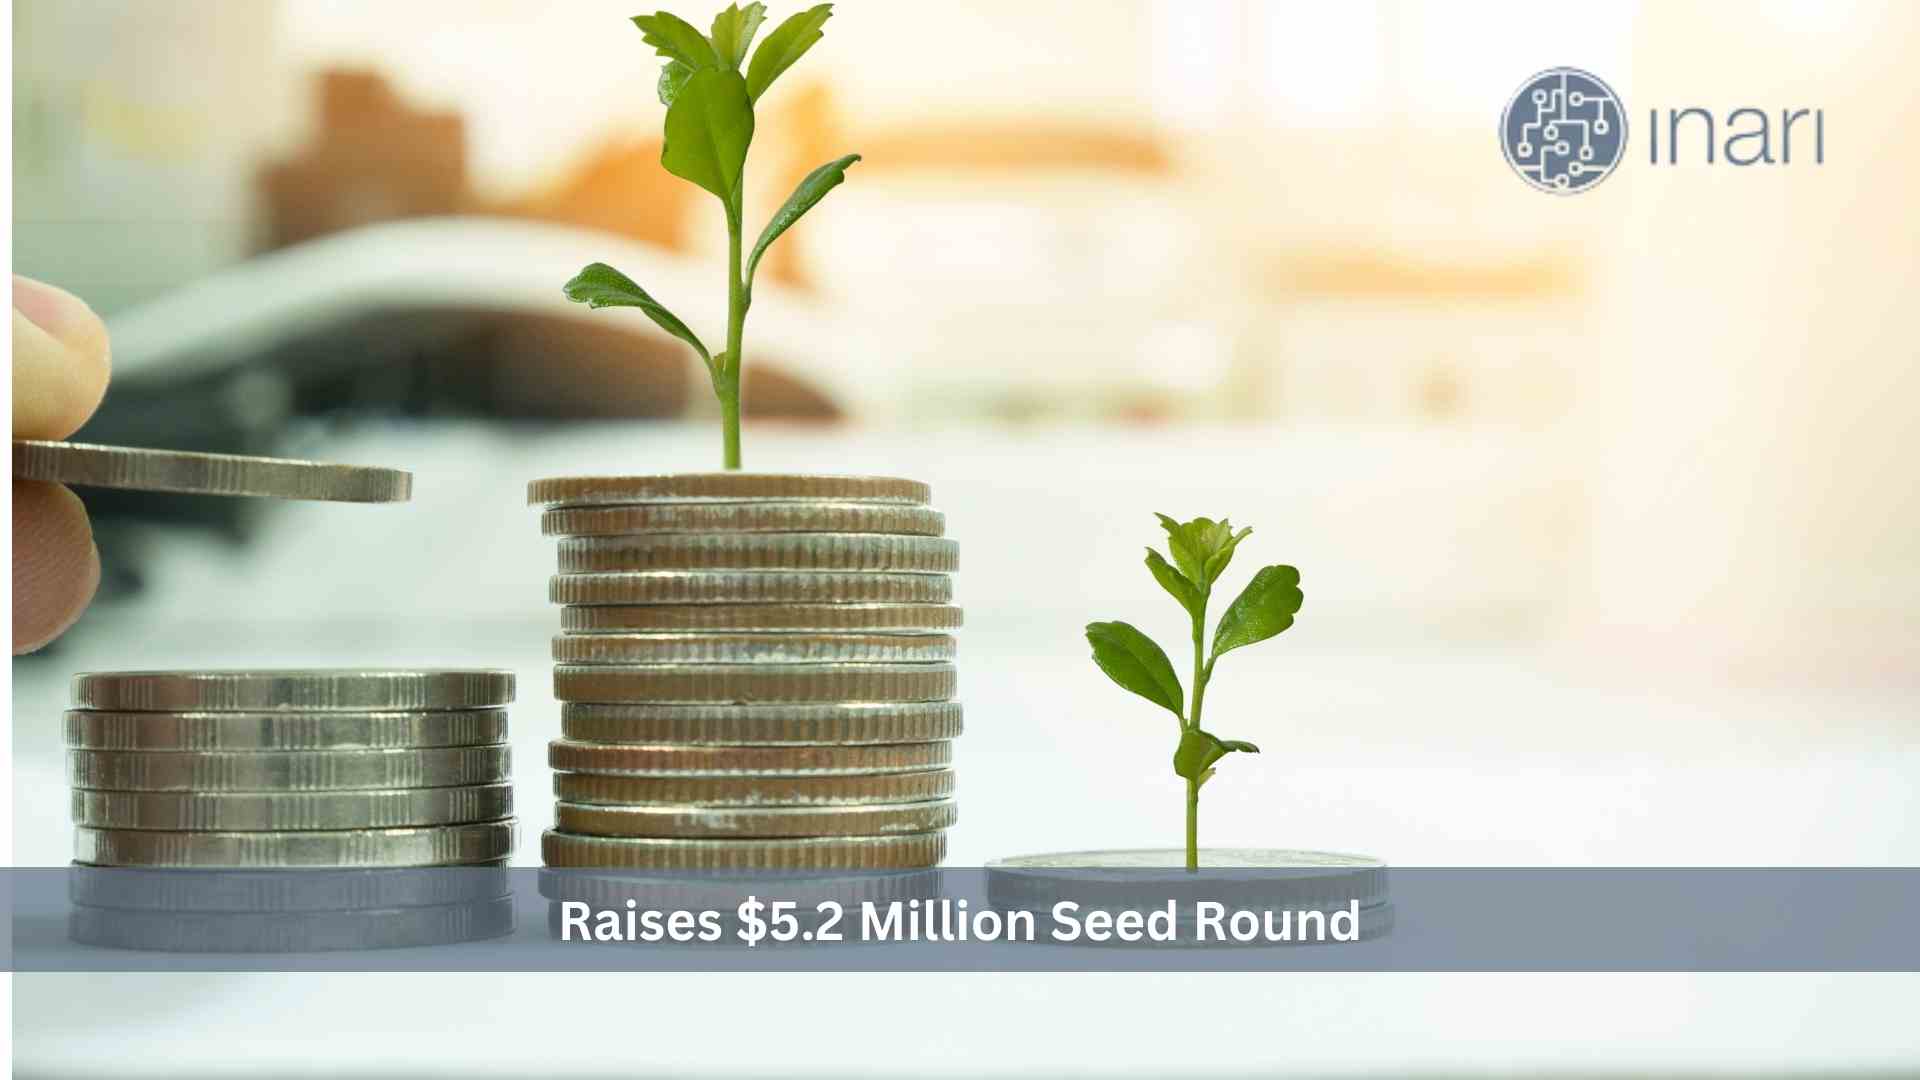 inari raises $5.2 Million Seed Round to Transform Insurance Infrastructure Market